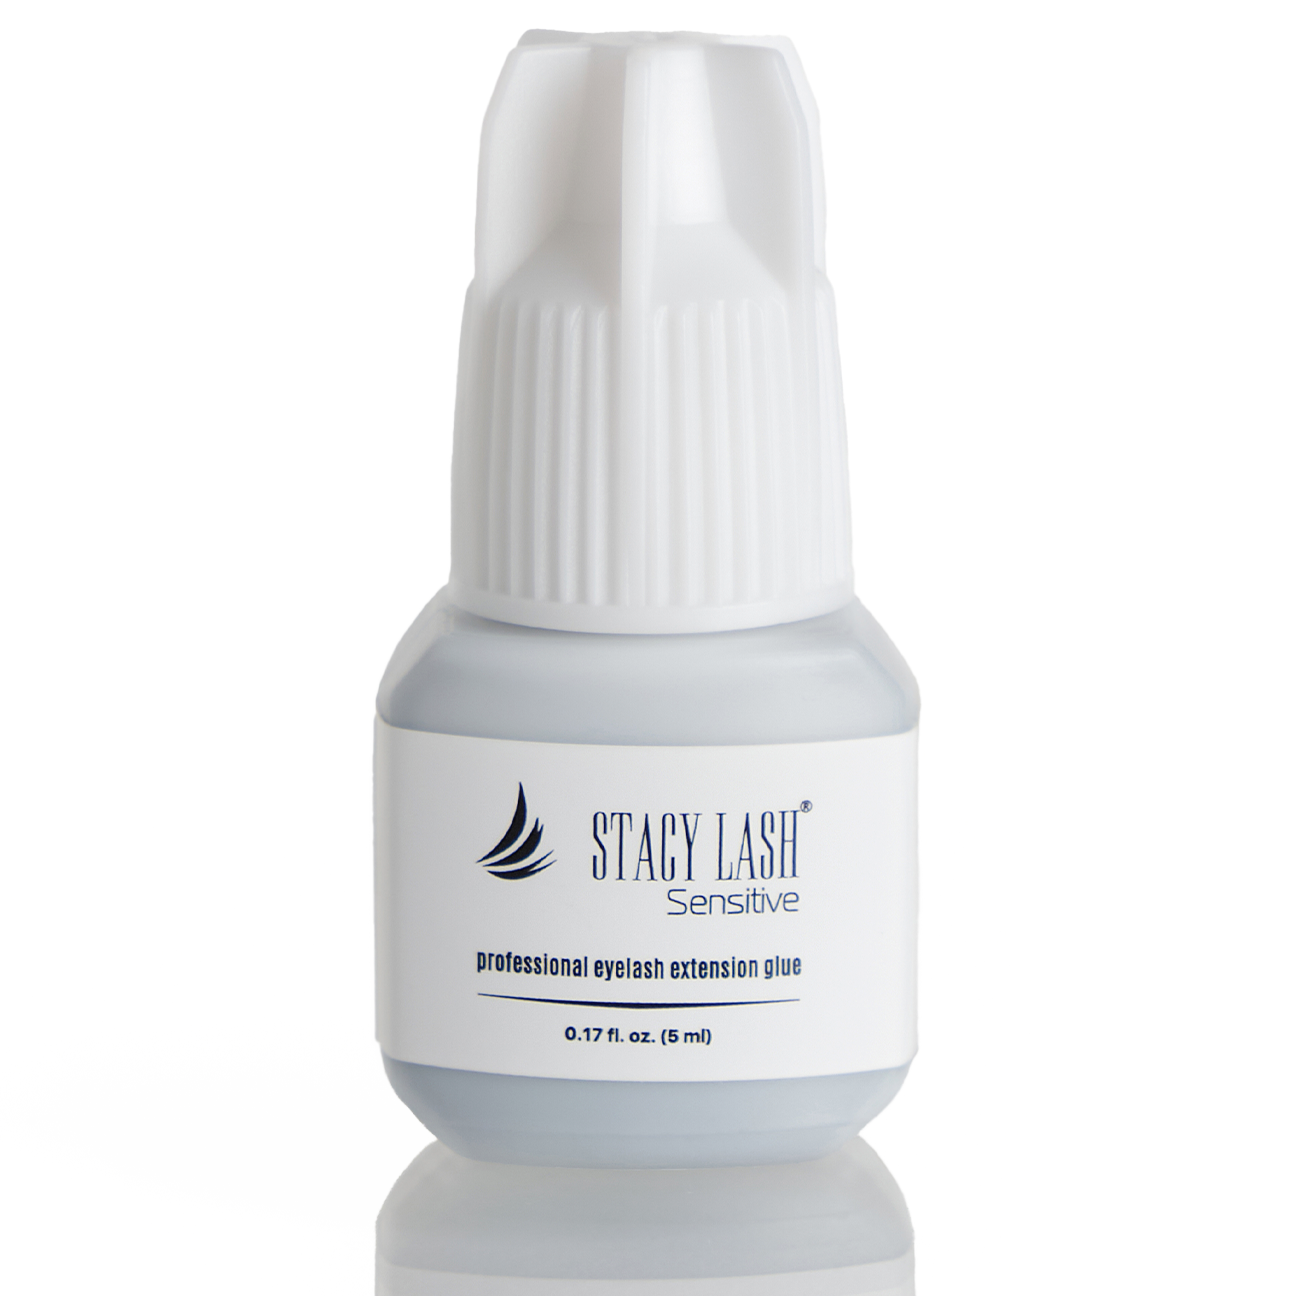 Stacy Lash Sensitive Eyelash Extension Glue - 5ml